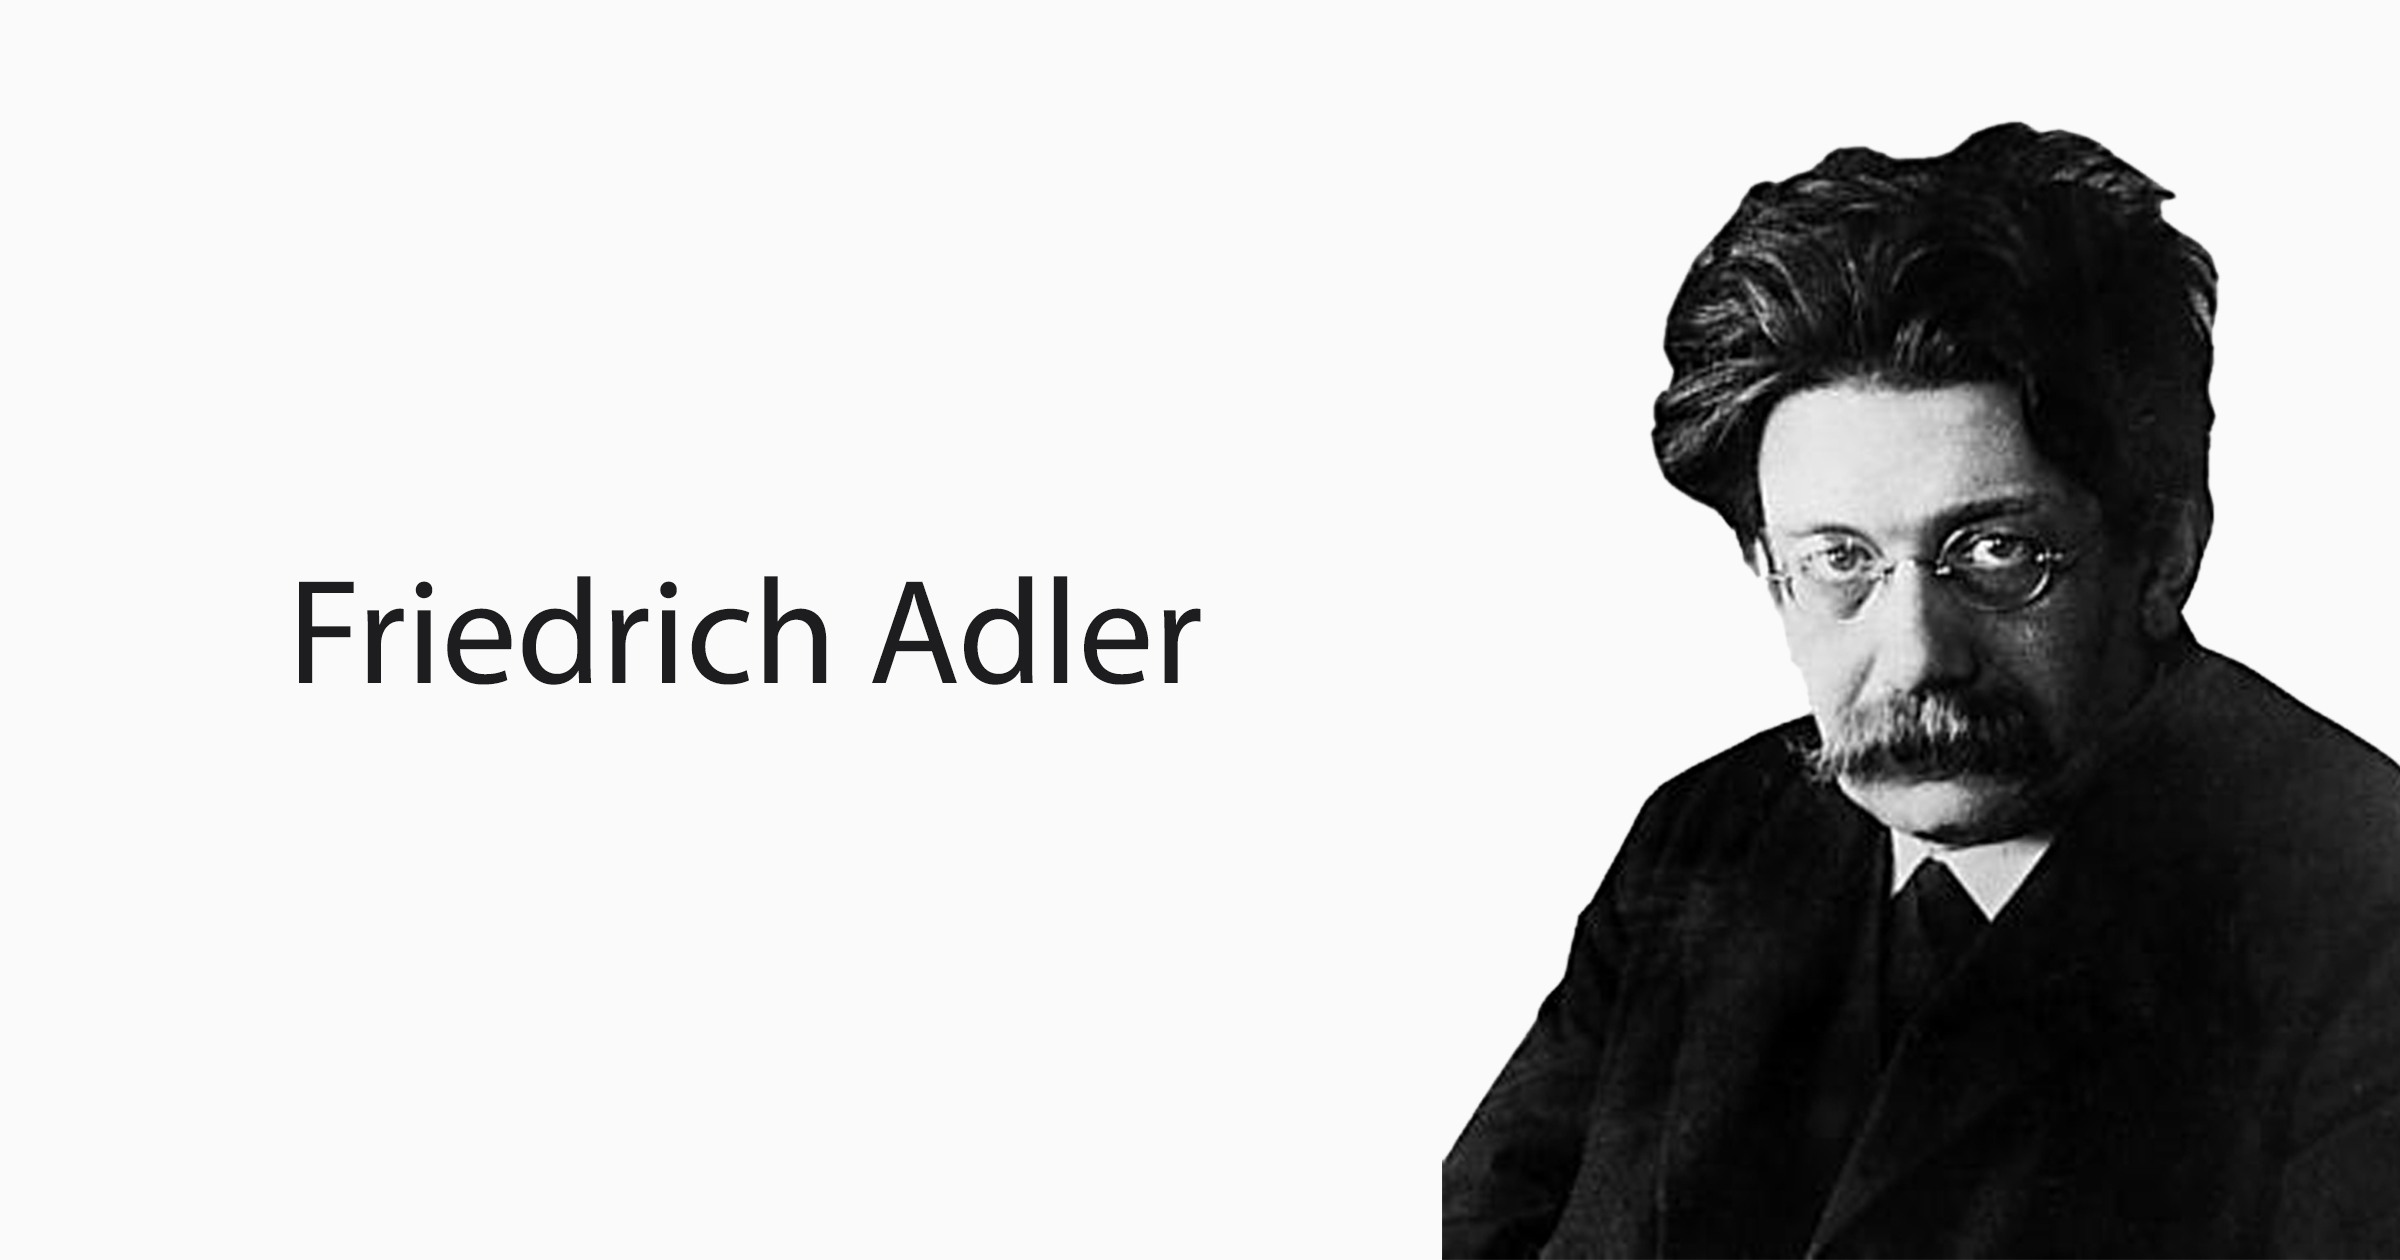 Friedrich Adler lecture